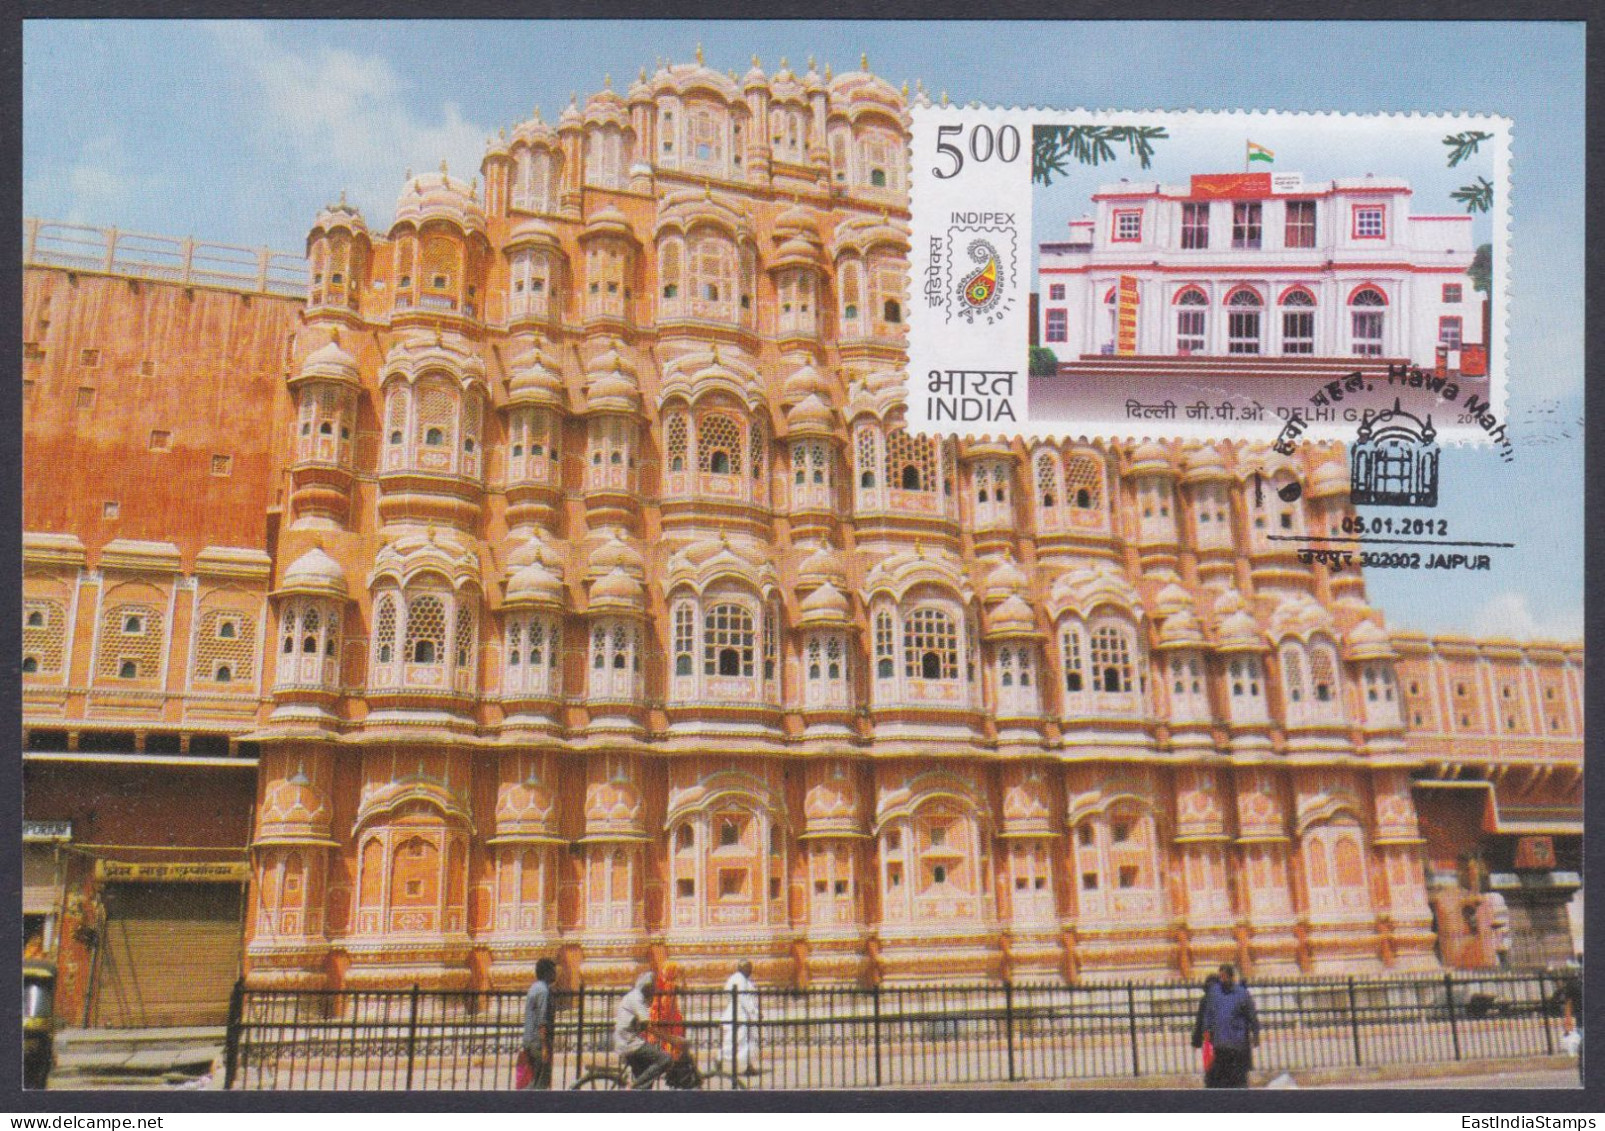 Inde India 2012 Maximum Card Hawa Mahal, Jaipur, Delhi G.P.O, Architecture, Rajput, Building, Medieval History, Max Card - Lettres & Documents